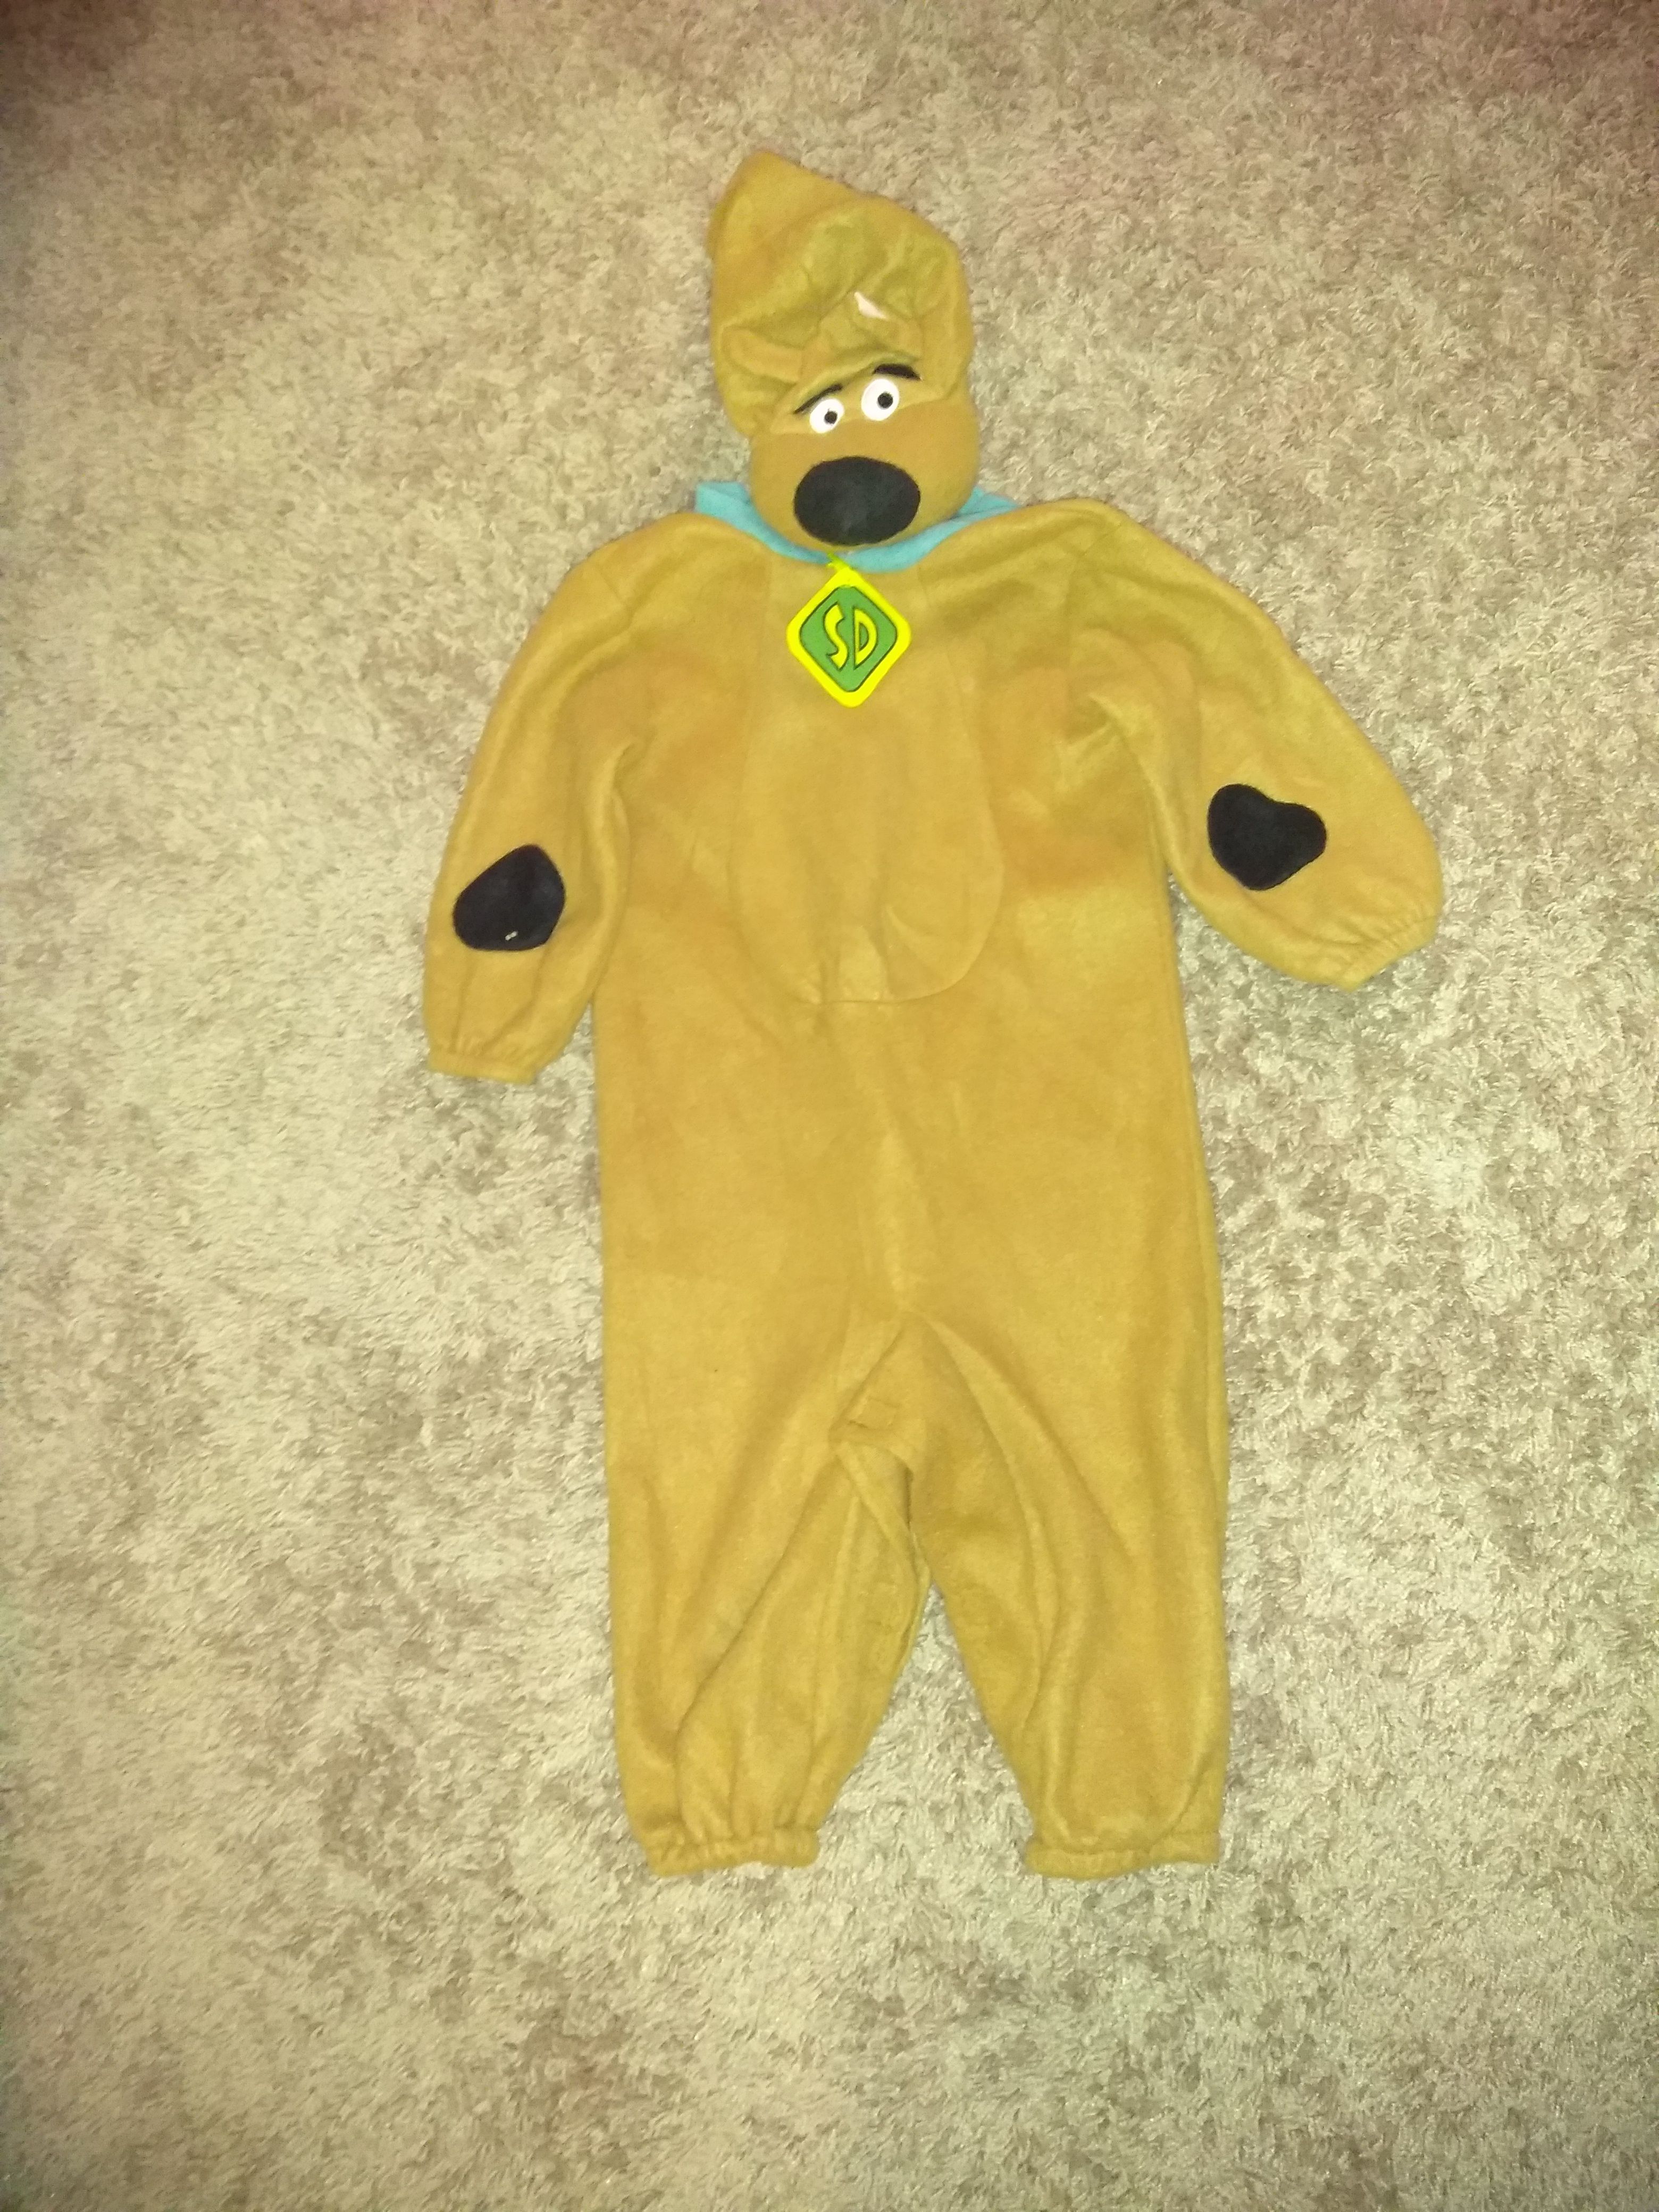 Scooby costume